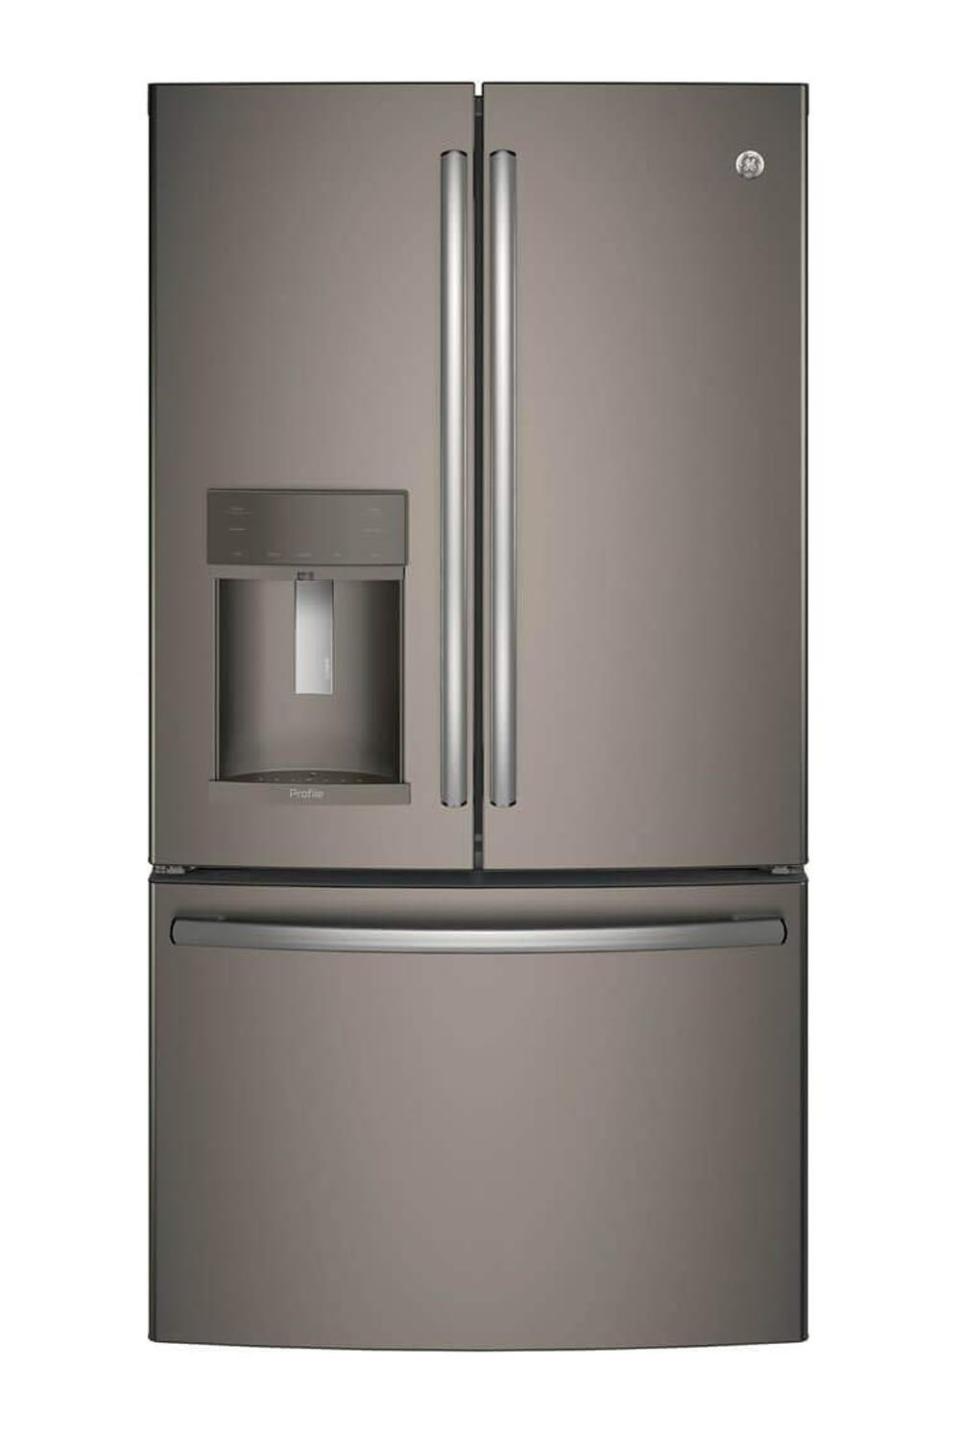 1) GE Profile Series French-Door Refrigerator